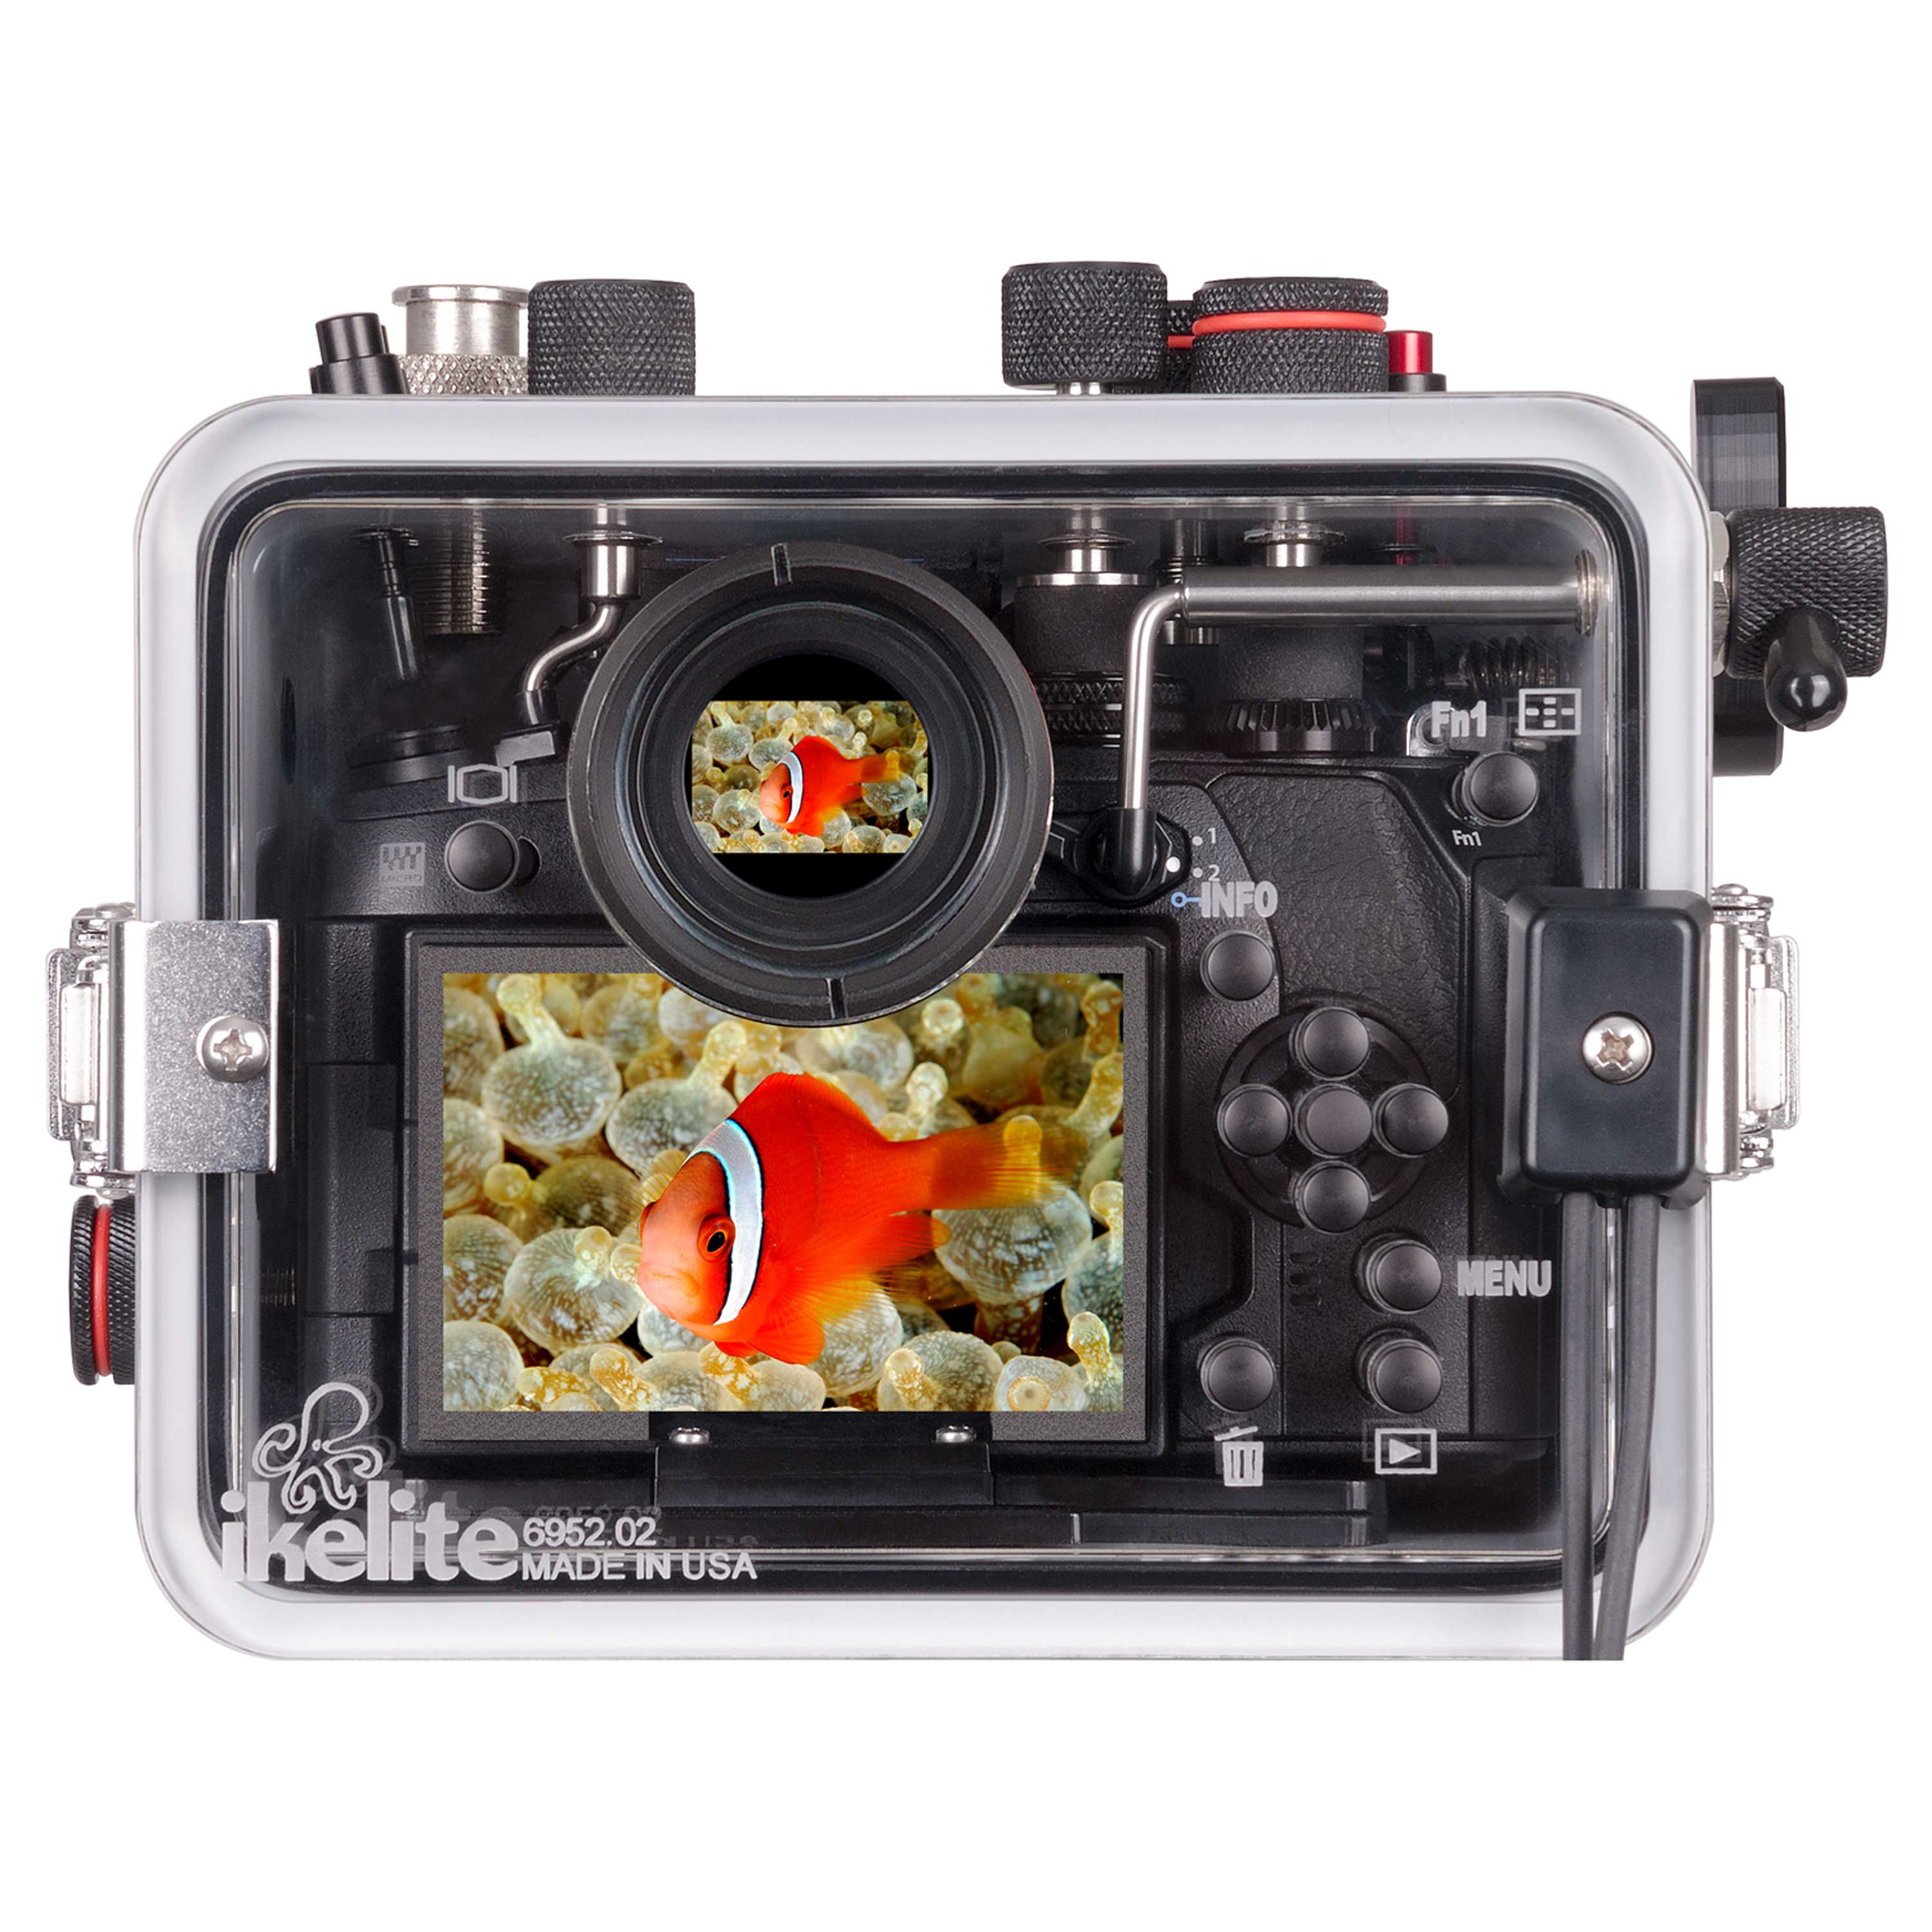 200DLM/B Underwater TTL Housing for Olympus OM-D E-M1 Mark II Mirrorless Micro Four-Thirds Cameras